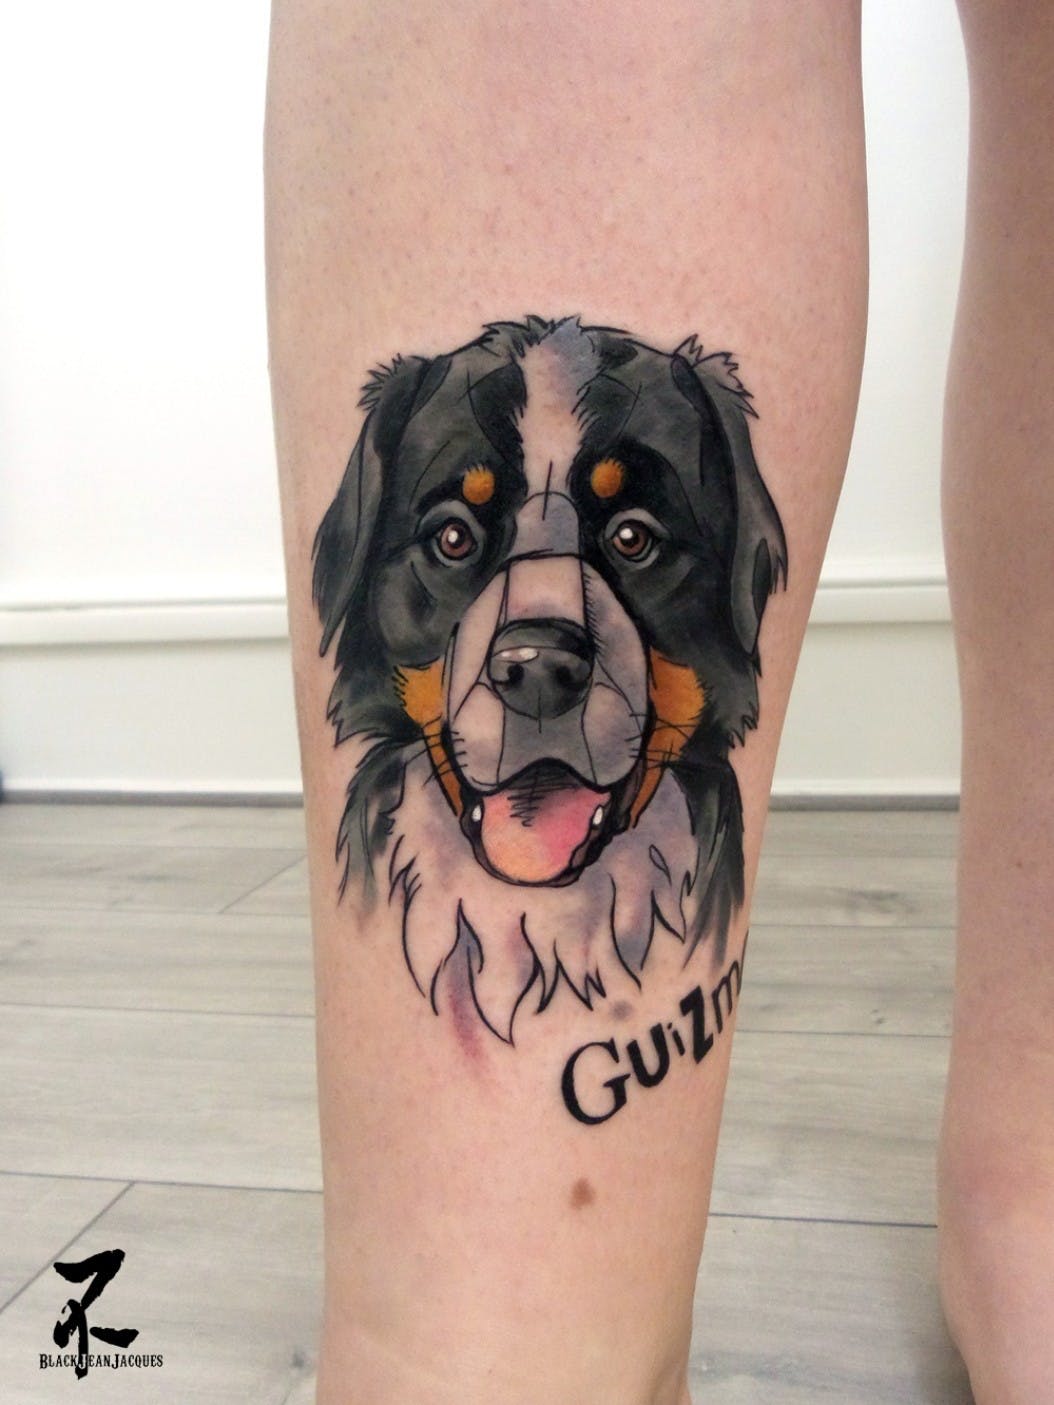 A Cartoon style tattoo of a Bernese Mountain Dog on the leg